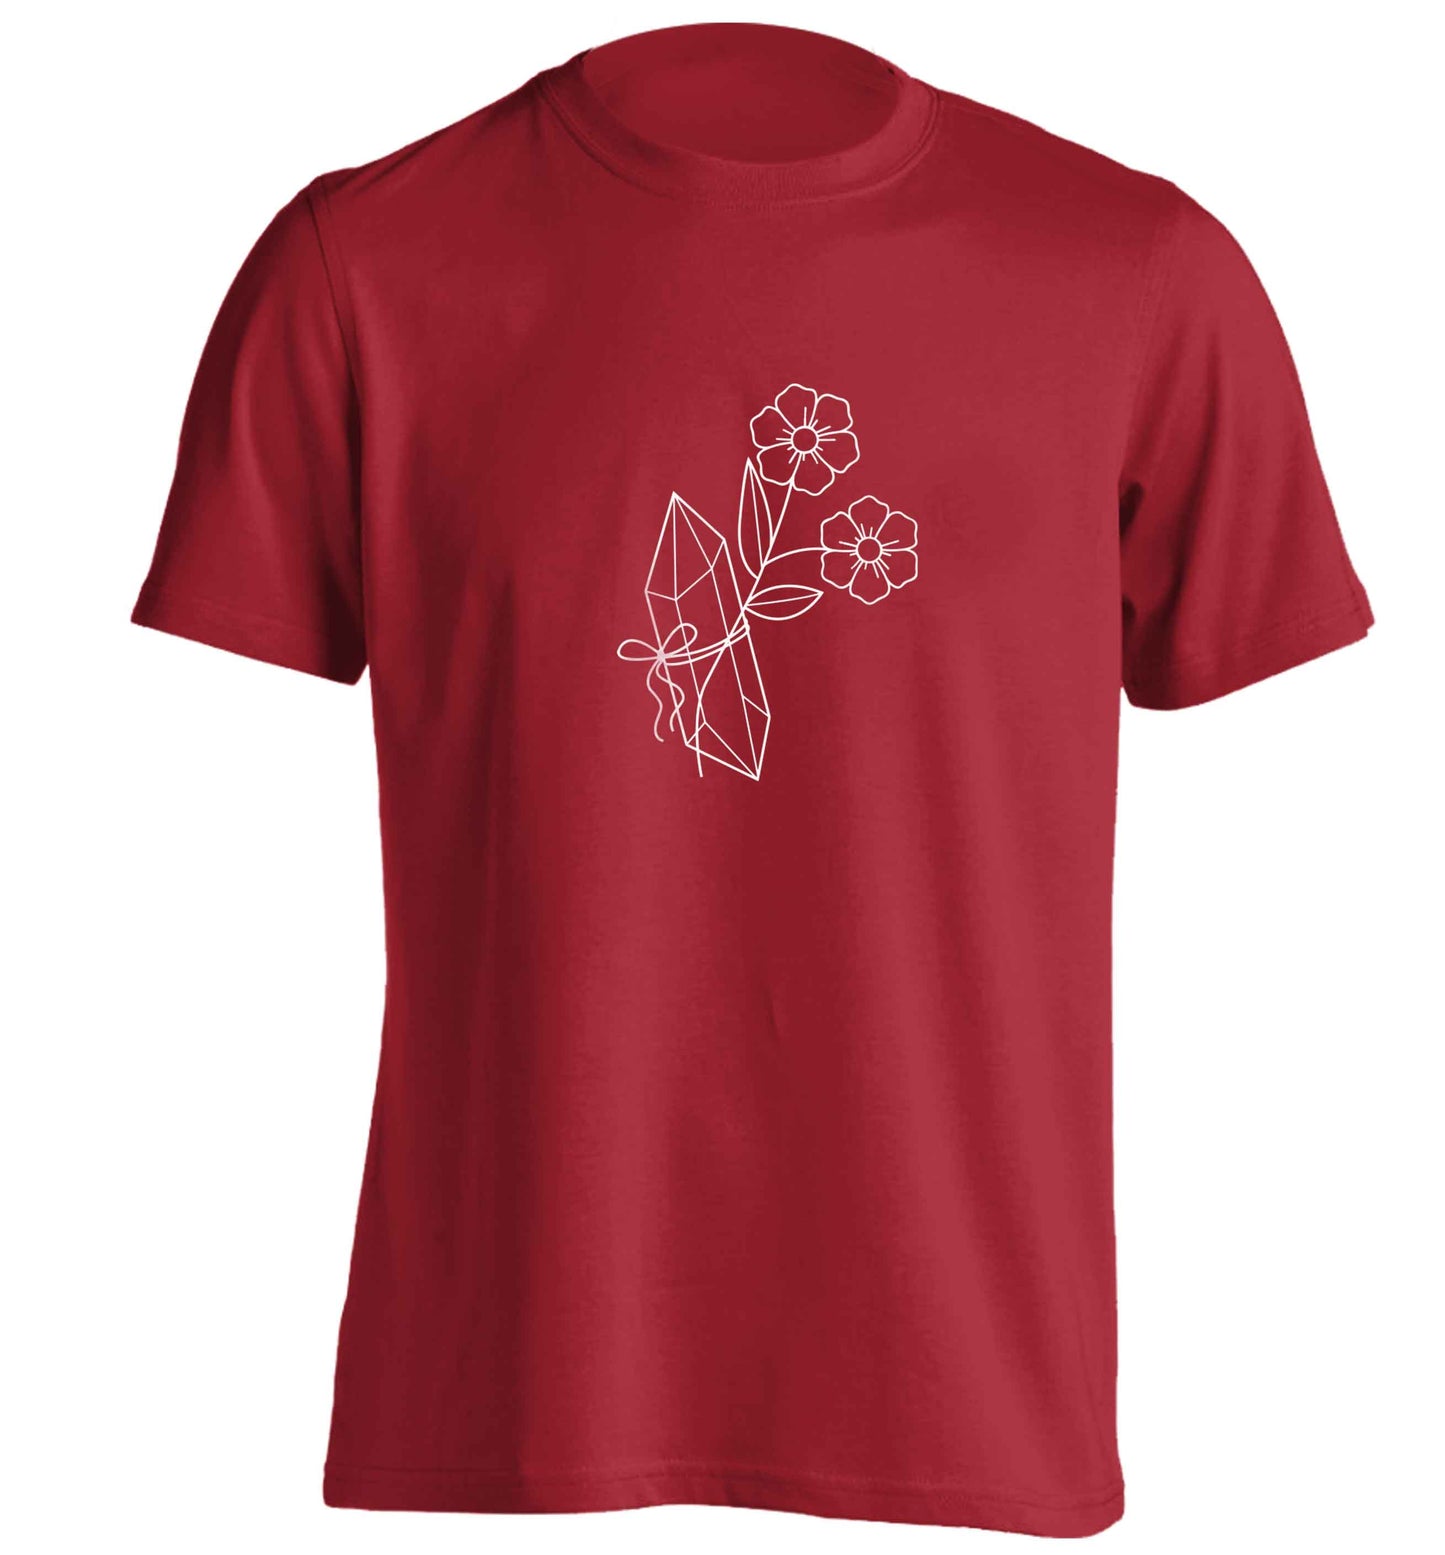 Crystal flower illustration adults unisex red Tshirt 2XL